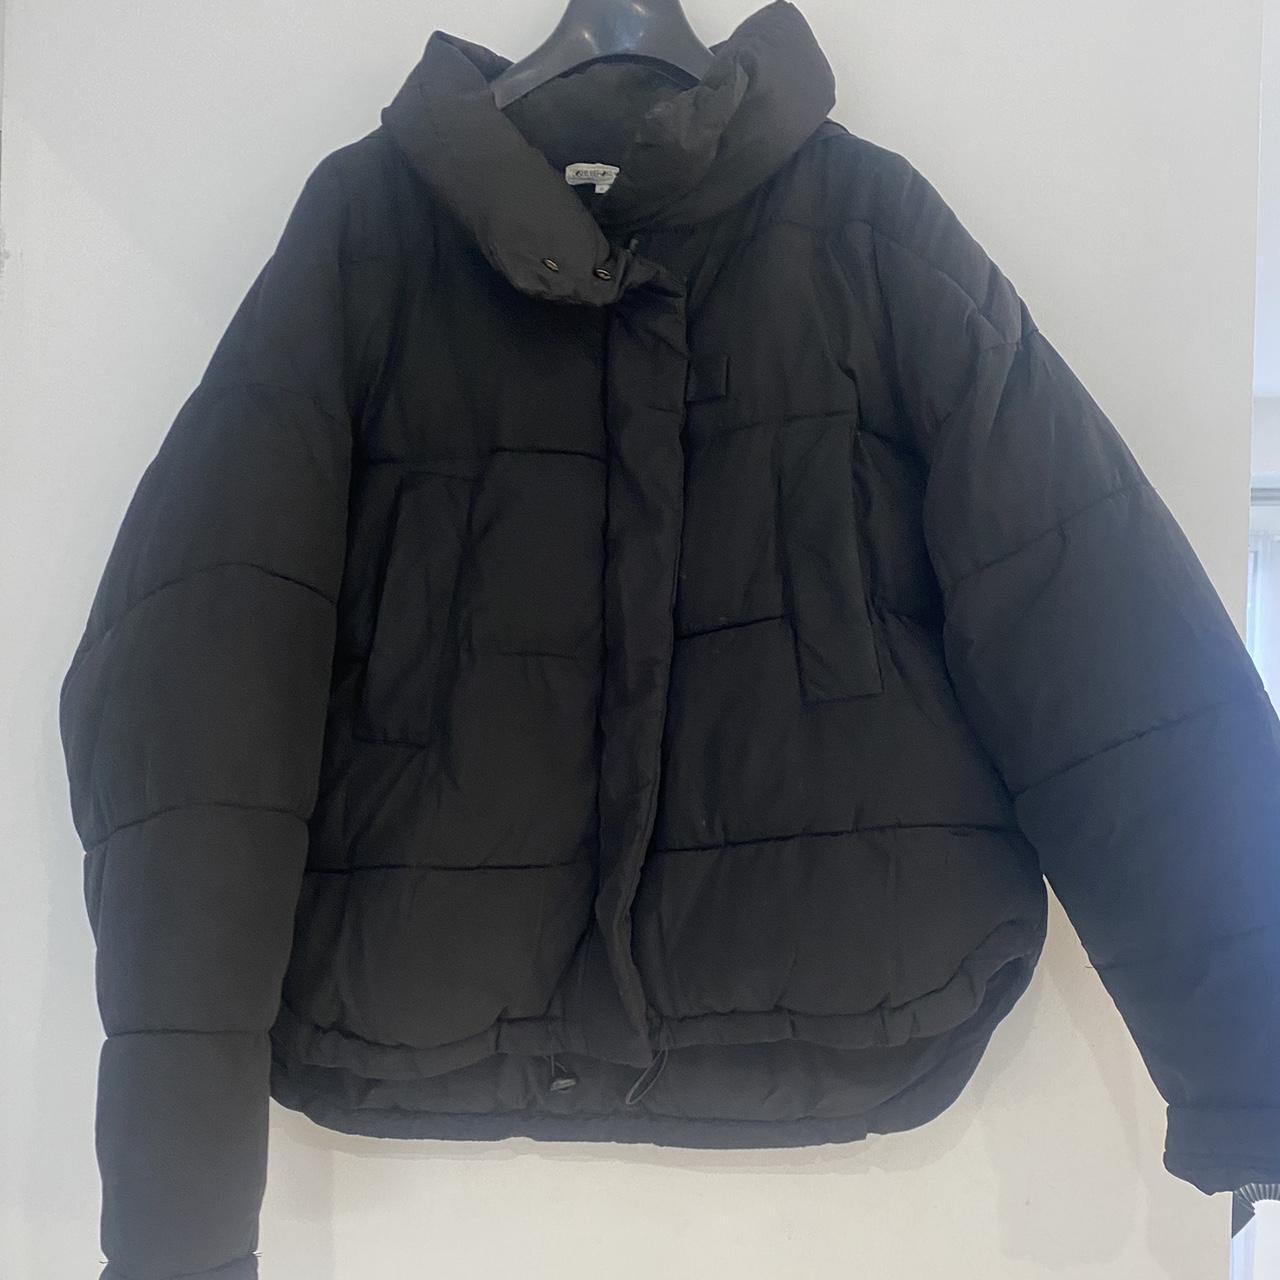 Urban Outfitters Black Puffer Jacket Size S Light... - Depop